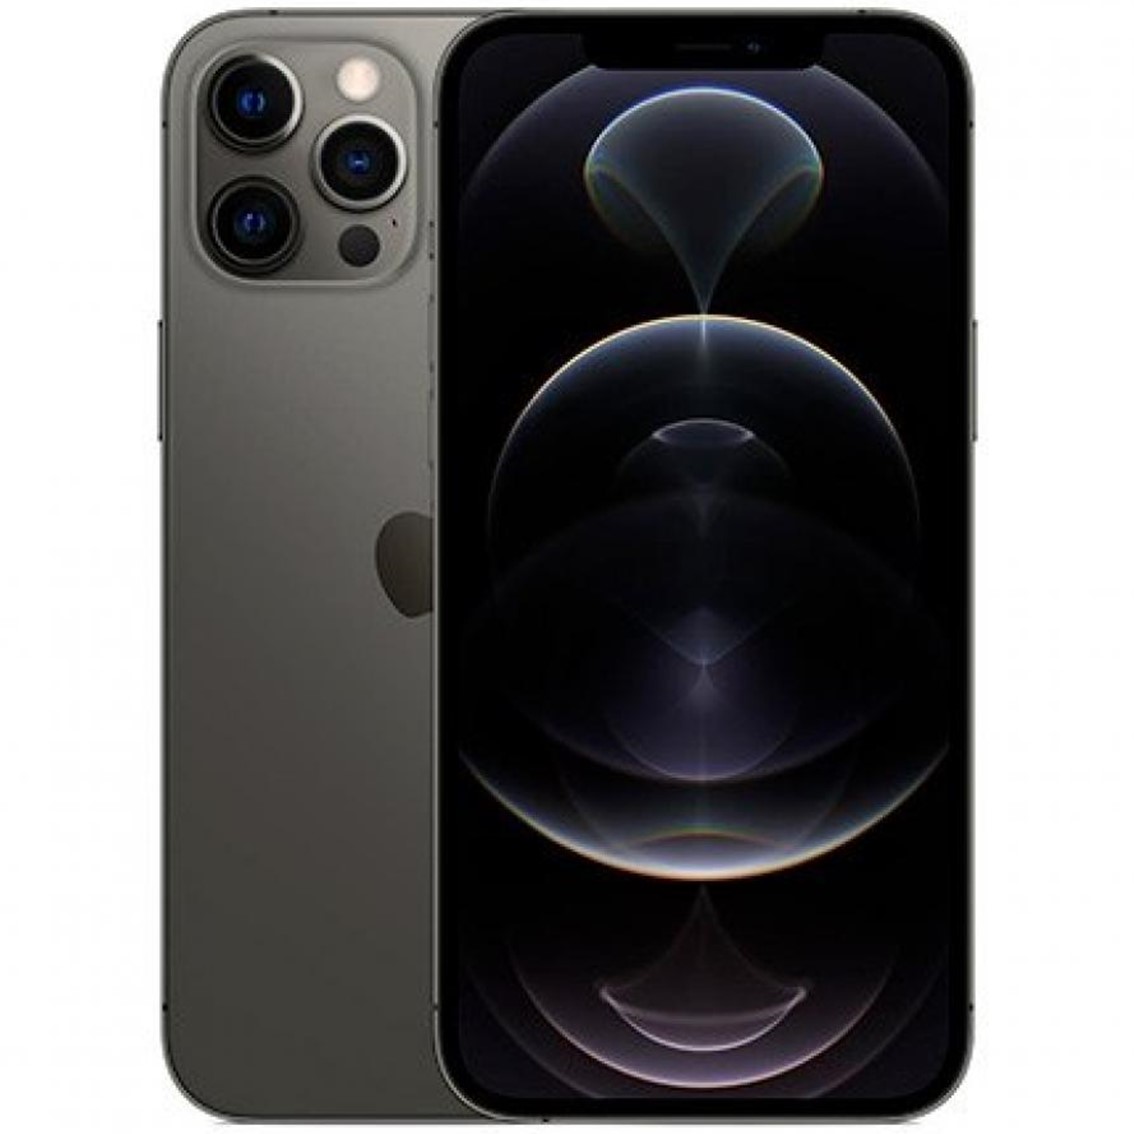 Apple iphone 12 pro max 256gb graphite sin cargador - sin auriculares - a14 bionic - 12mpx - 6.7 mgdc3ql - a